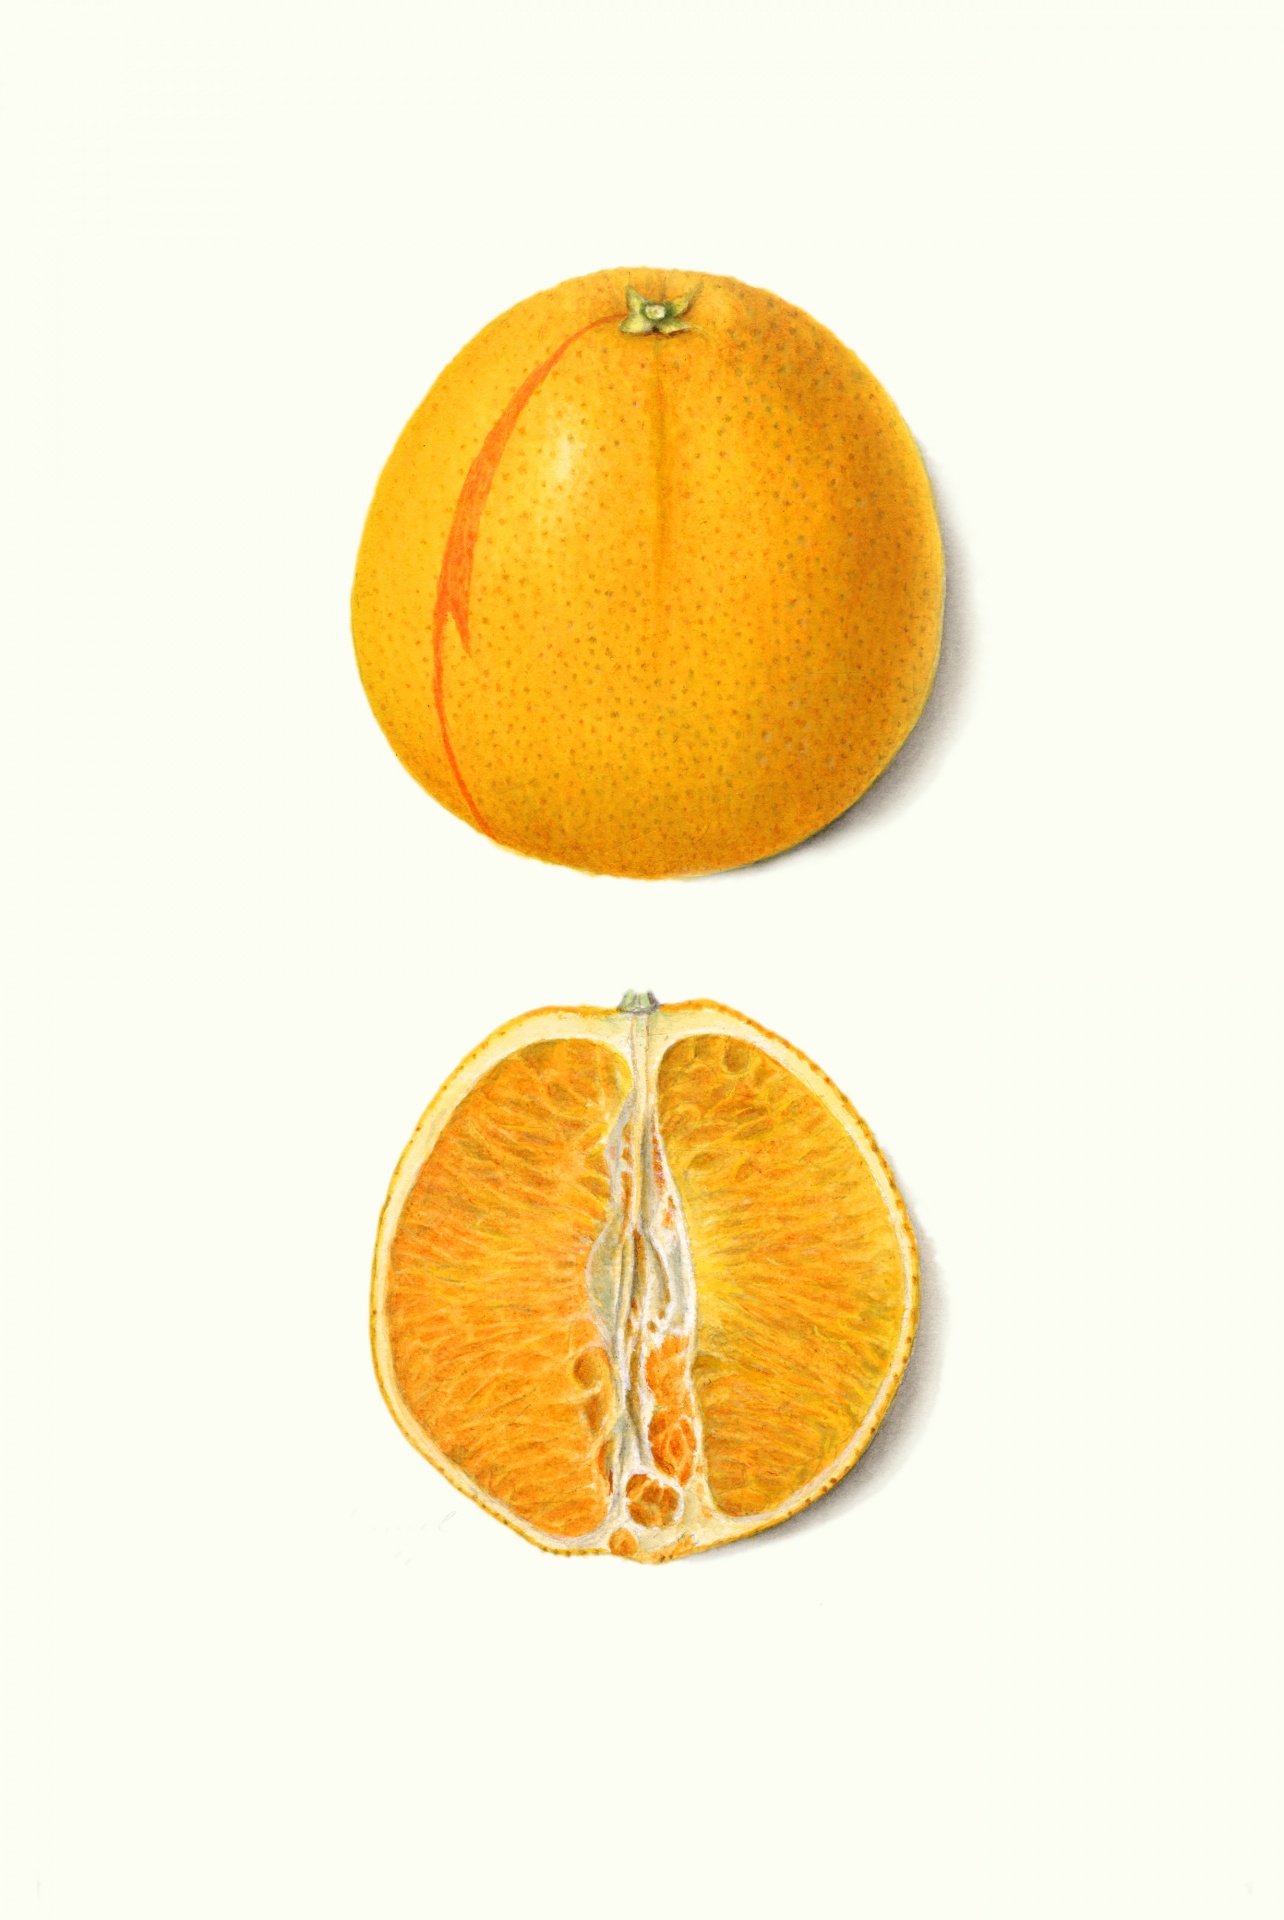 Naranja fruta fruta vintage